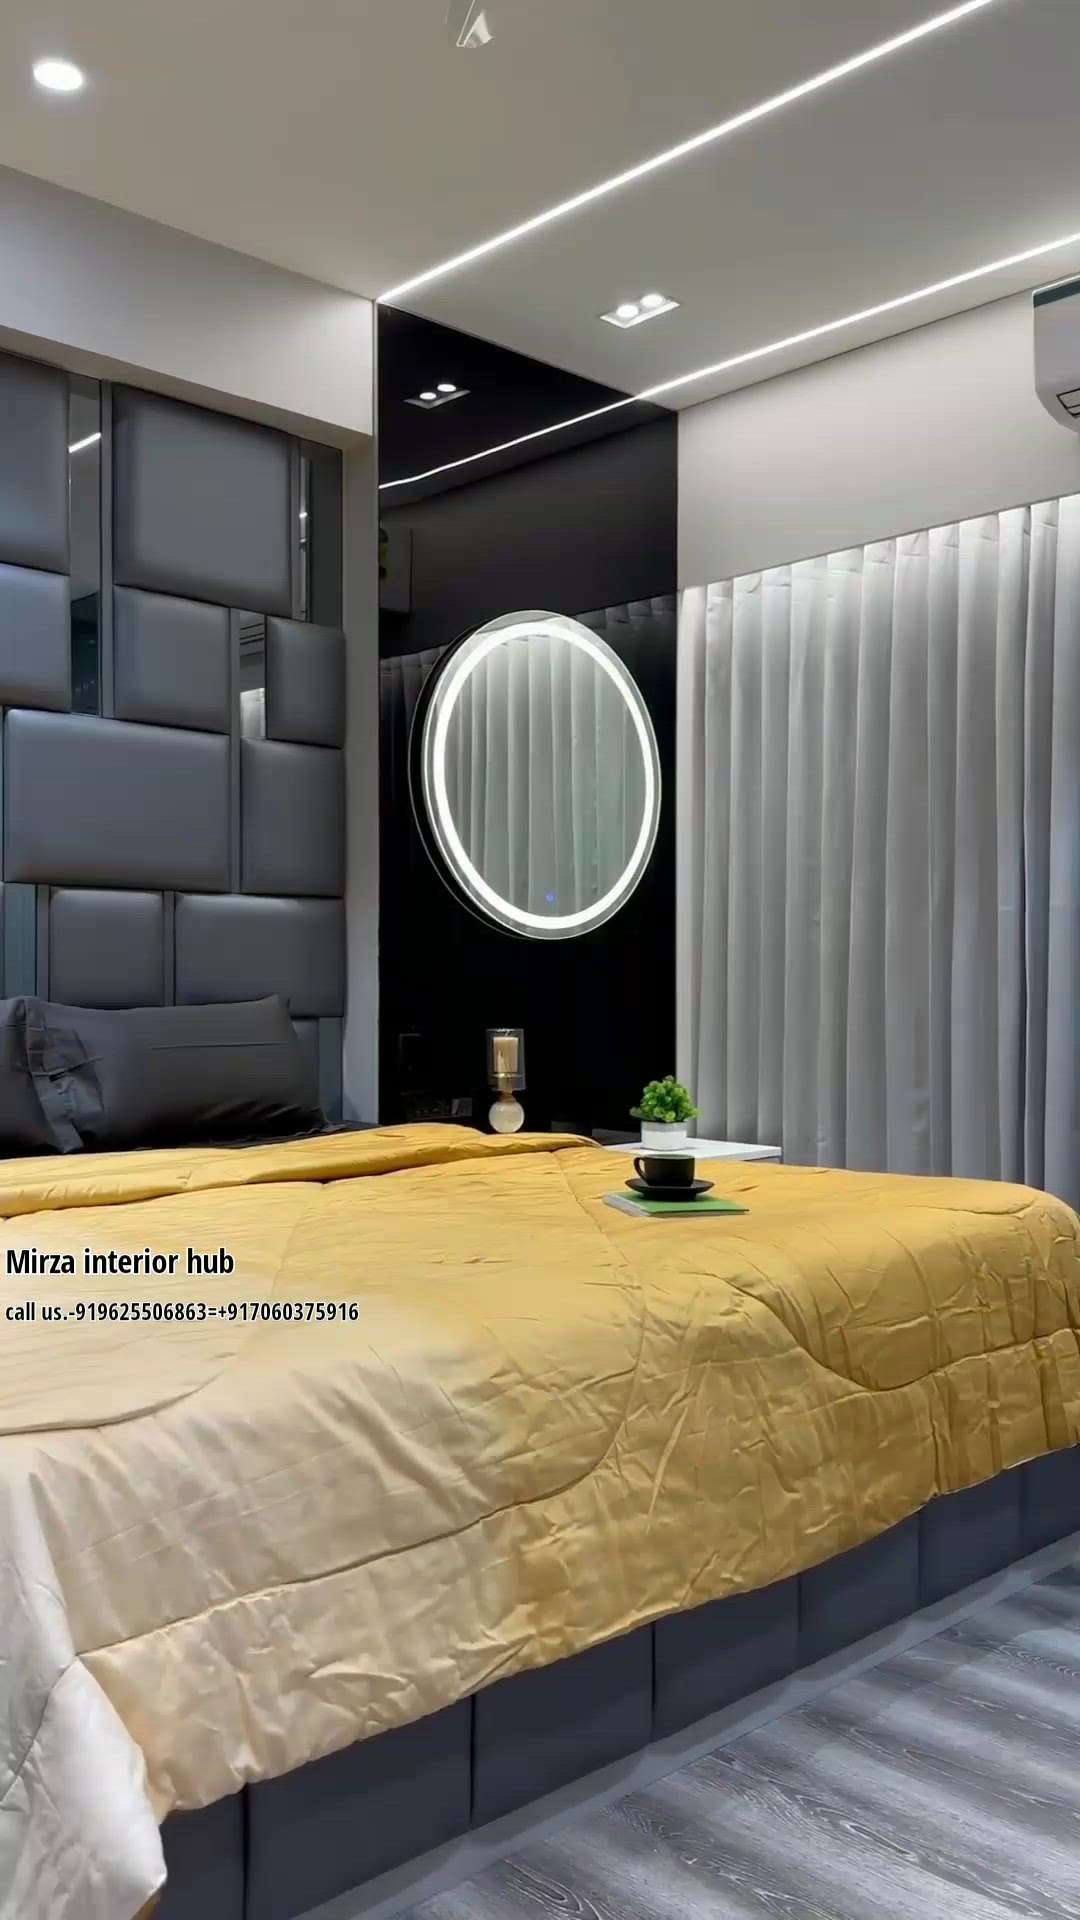 #BedroomDecor  #MasterBedroom  #LUXURY_BED  #BedroomDesigns  #HomeDecor  #tvunits  #WardrobeDesigns  #furniture  work karane ke liye contact kare
whats.+919625506863
call.+917060375916
Saquib Mirza